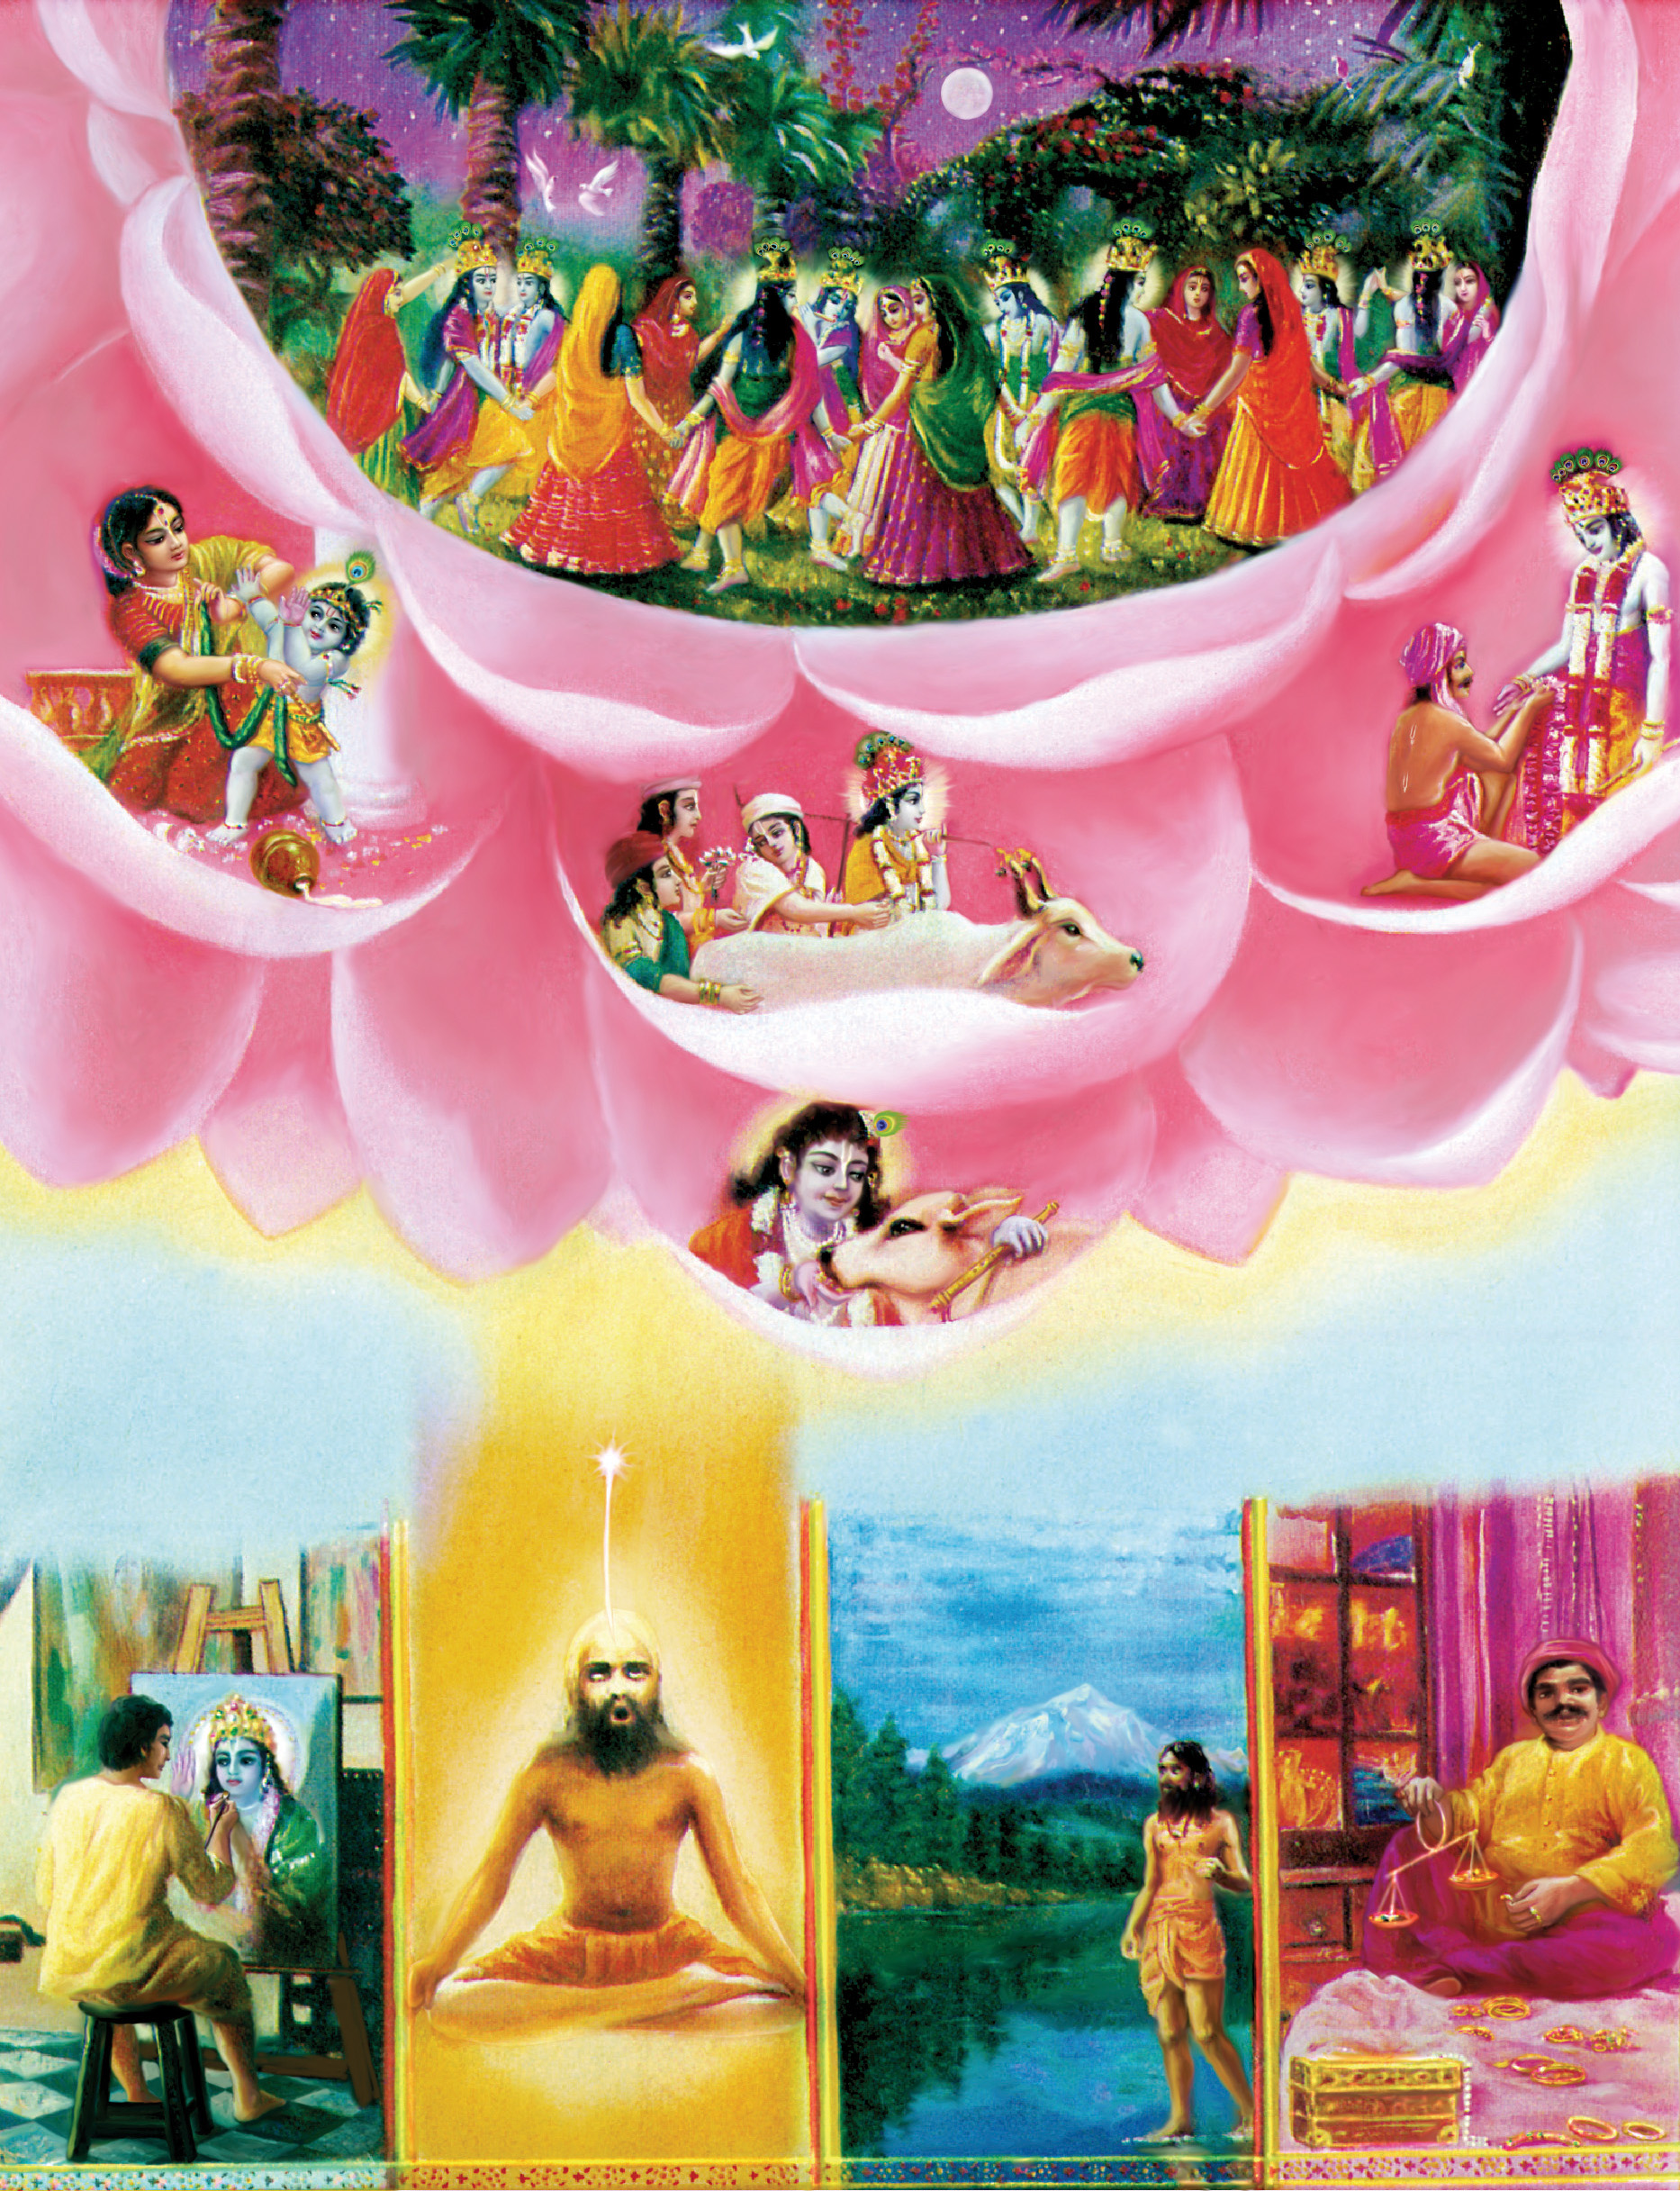 Bhagavad Gita: As they surrender to Me, I reward them accordingly.